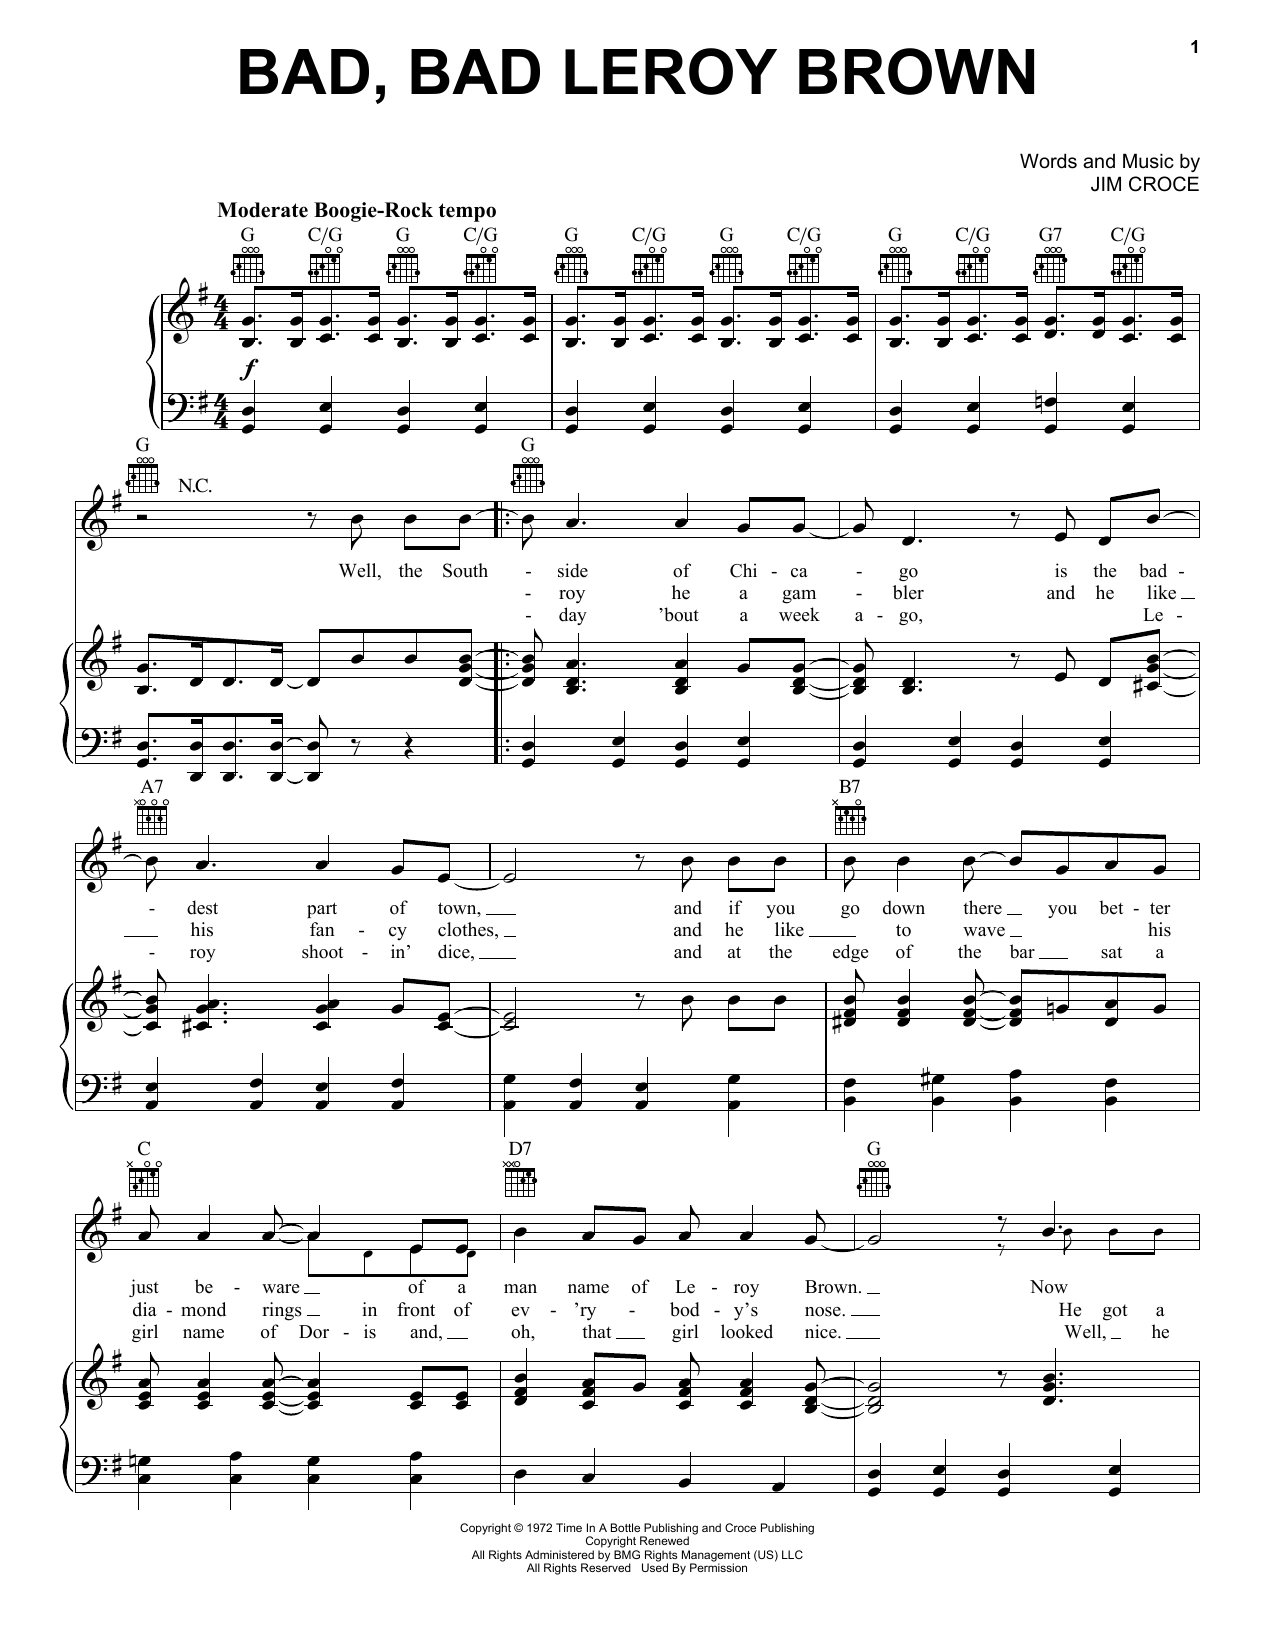 Jim Croce Bad, Bad Leroy Brown Sheet Music Notes & Chords for Trombone - Download or Print PDF